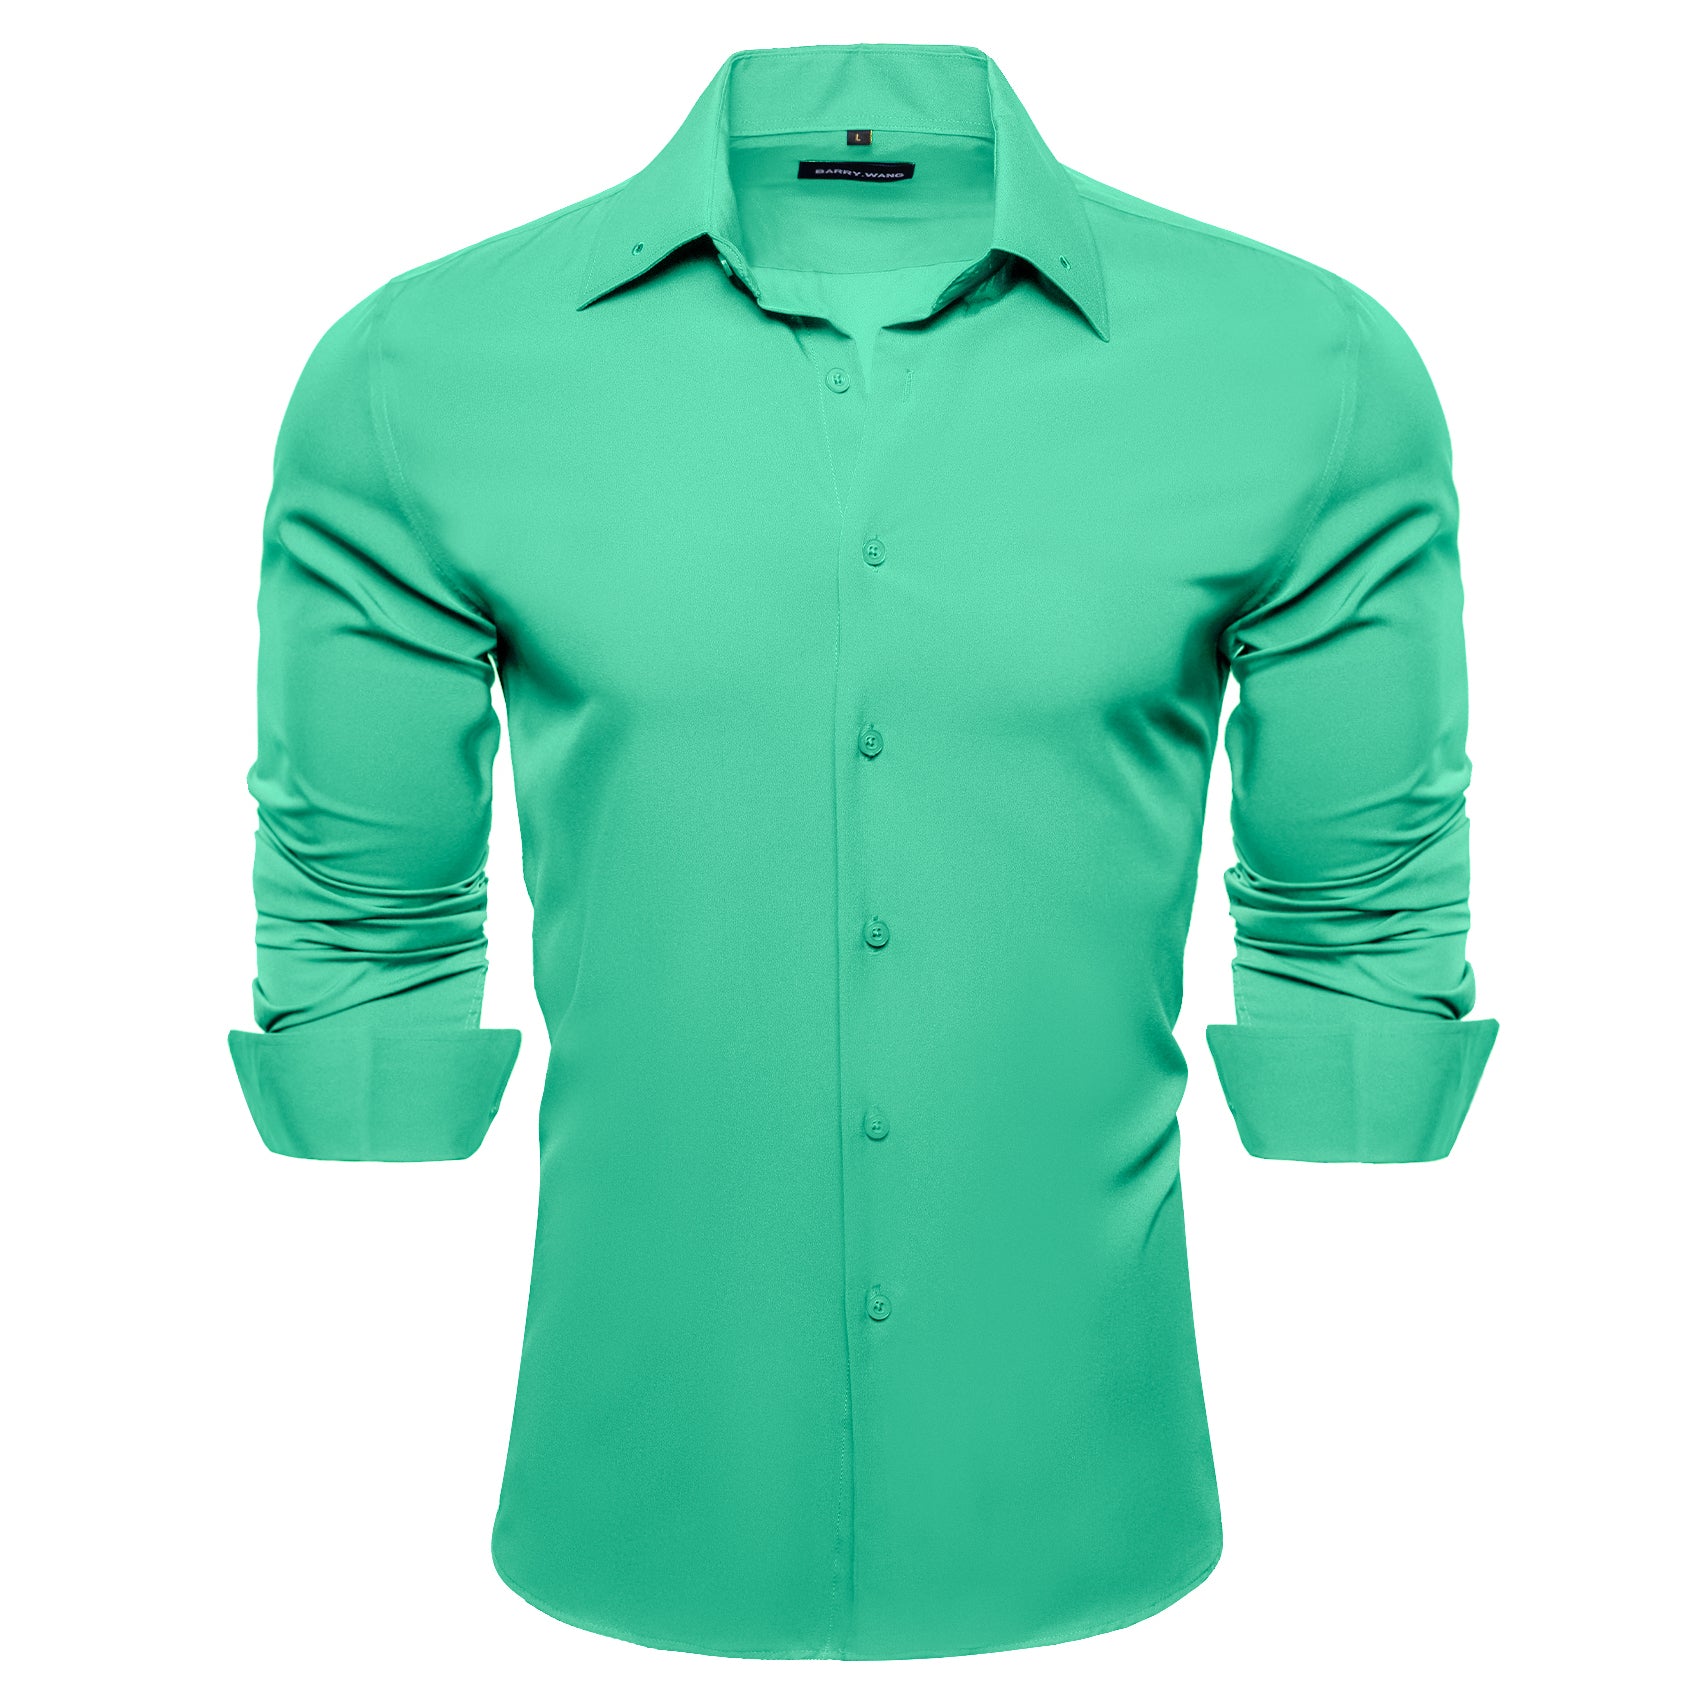 Barry.wang Pale Green Solid Silk Shirt